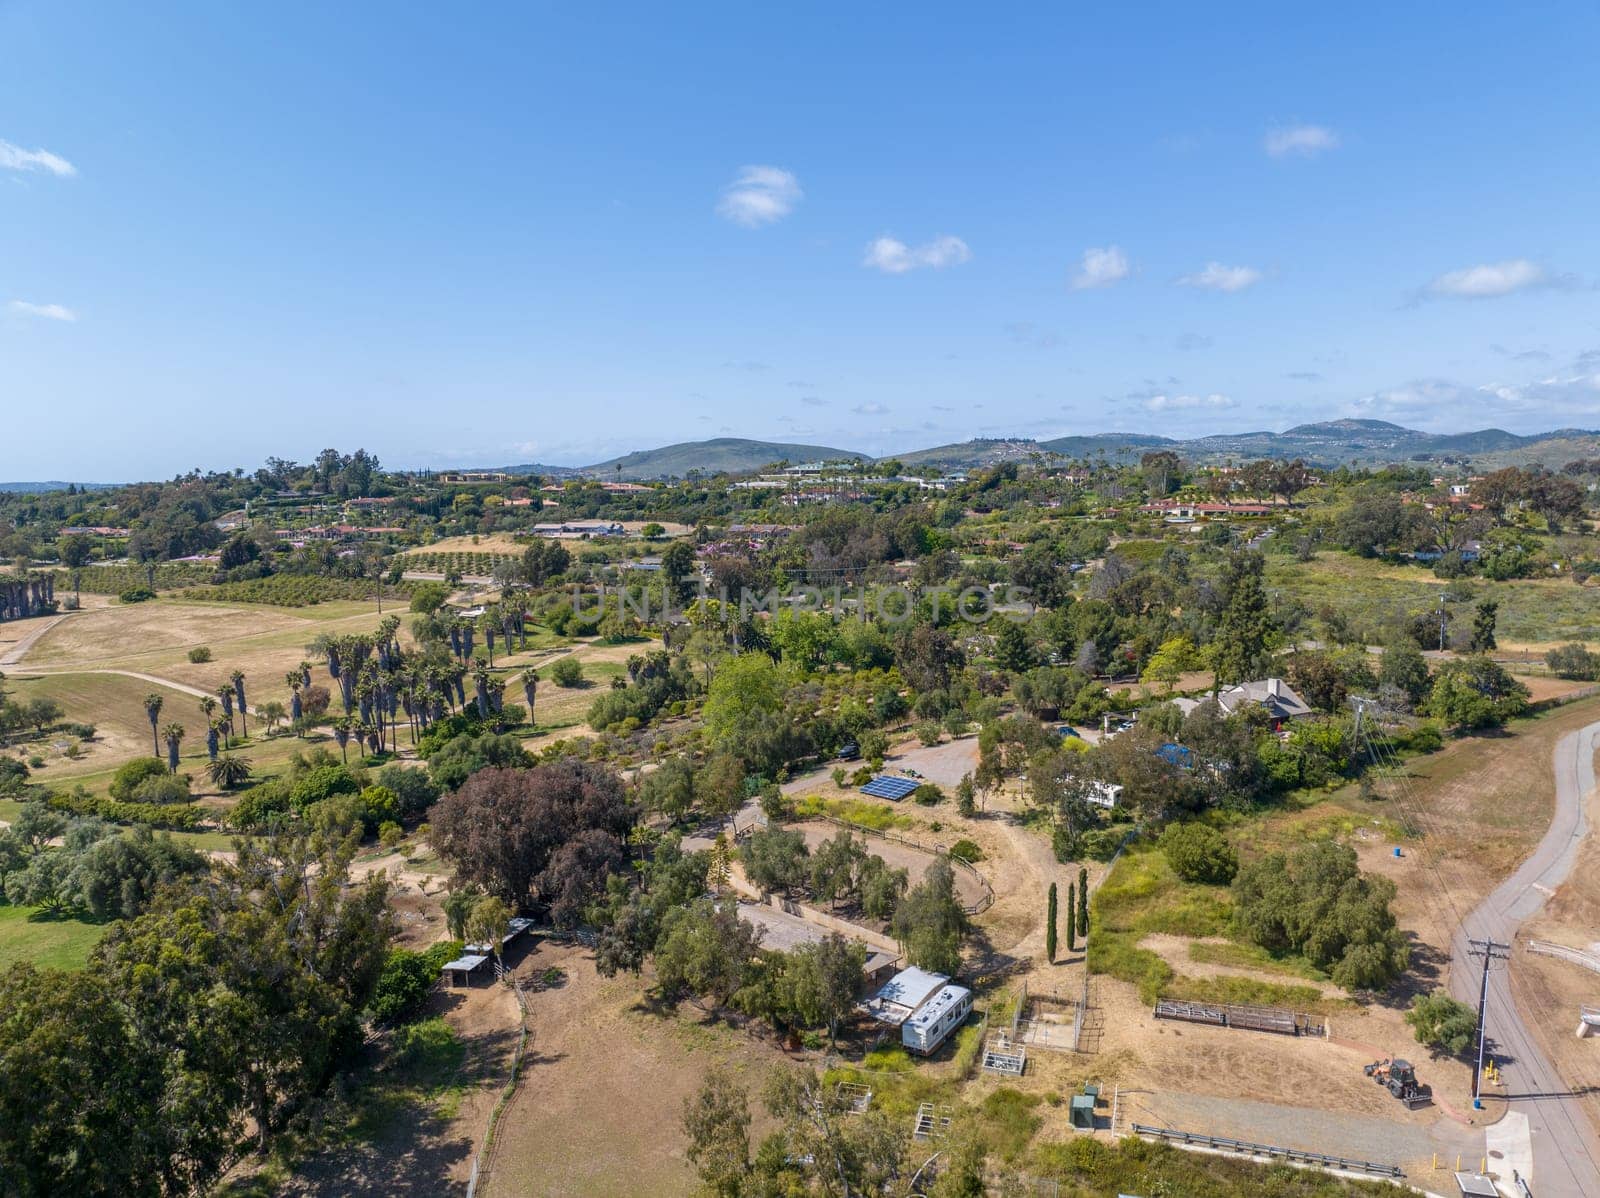 Aerial view over Rancho Santa Fe green valley landscape in San Diego, California, USA